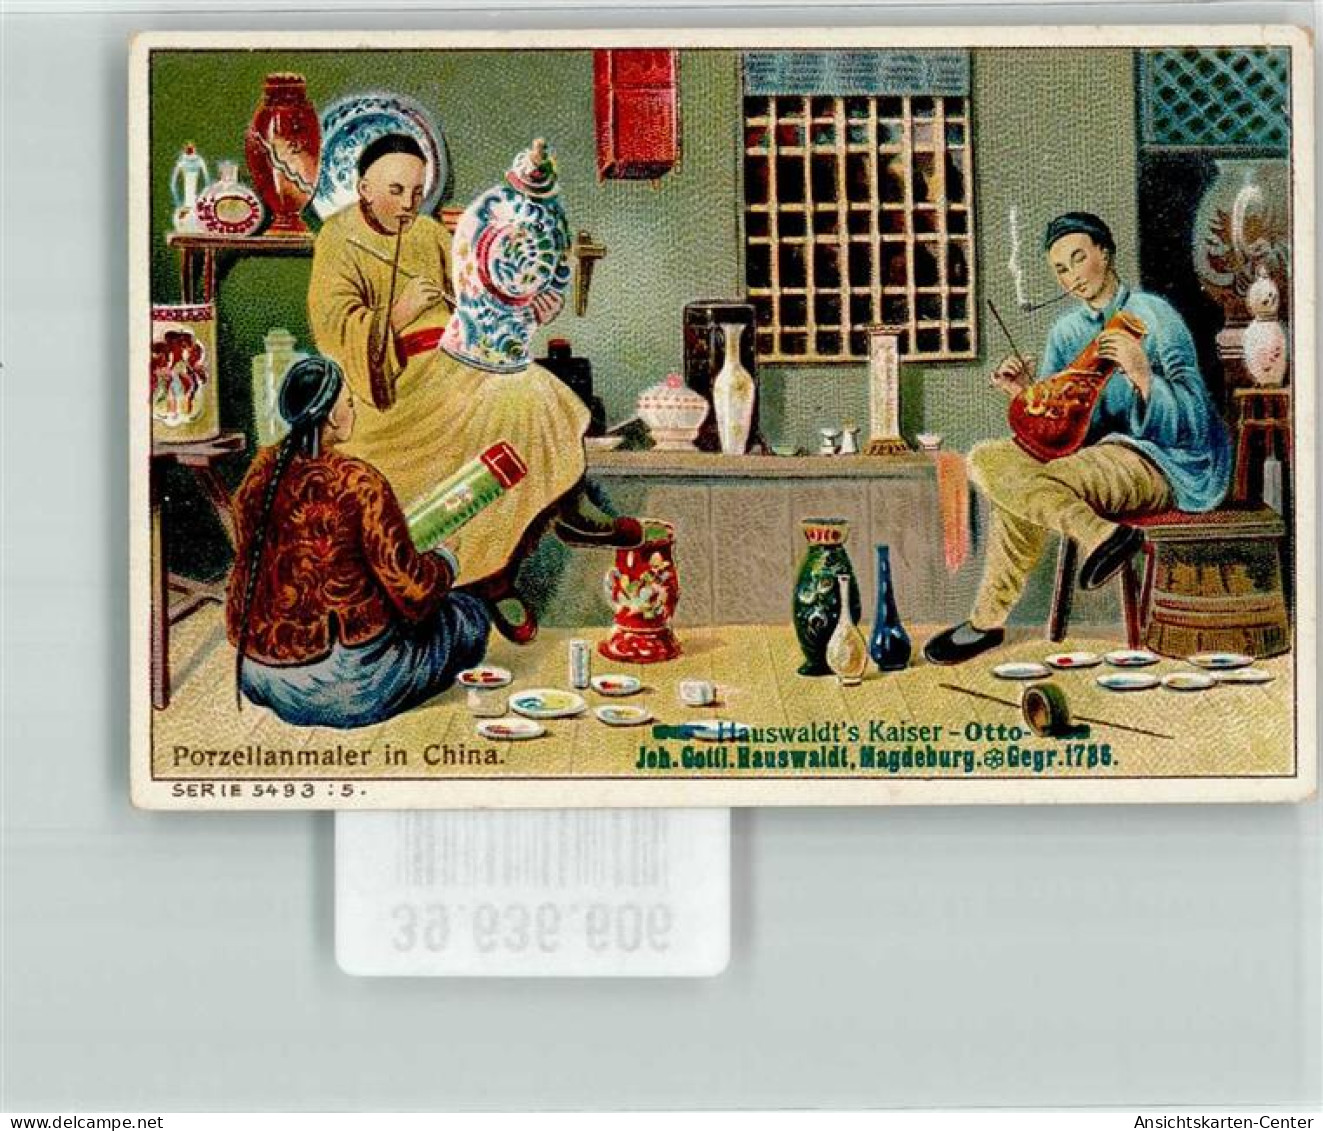 39636606 - Handlung Hauswaldt Kaiser Otto Magdeburg Tracht Porzellanmaler China - China